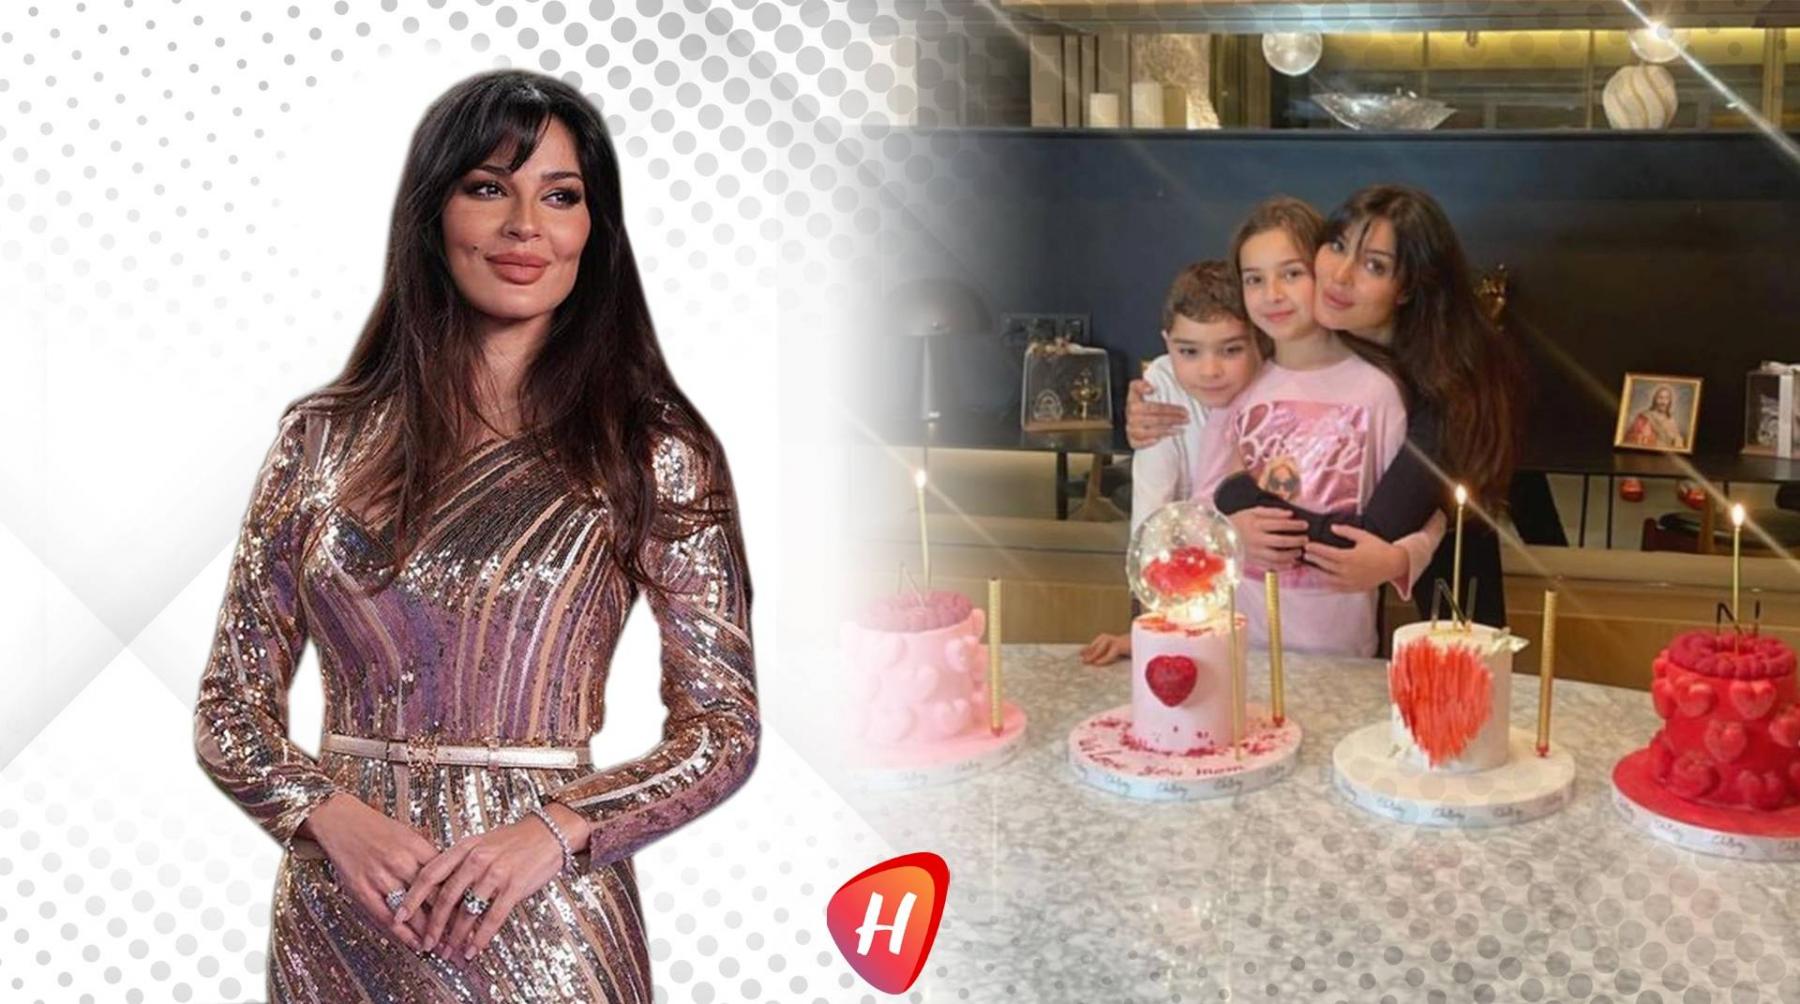 نادين نسيب نجيم تحتفل بعيدها مع طفليها... وهكذا فاجأها خطيبها (فيديو)